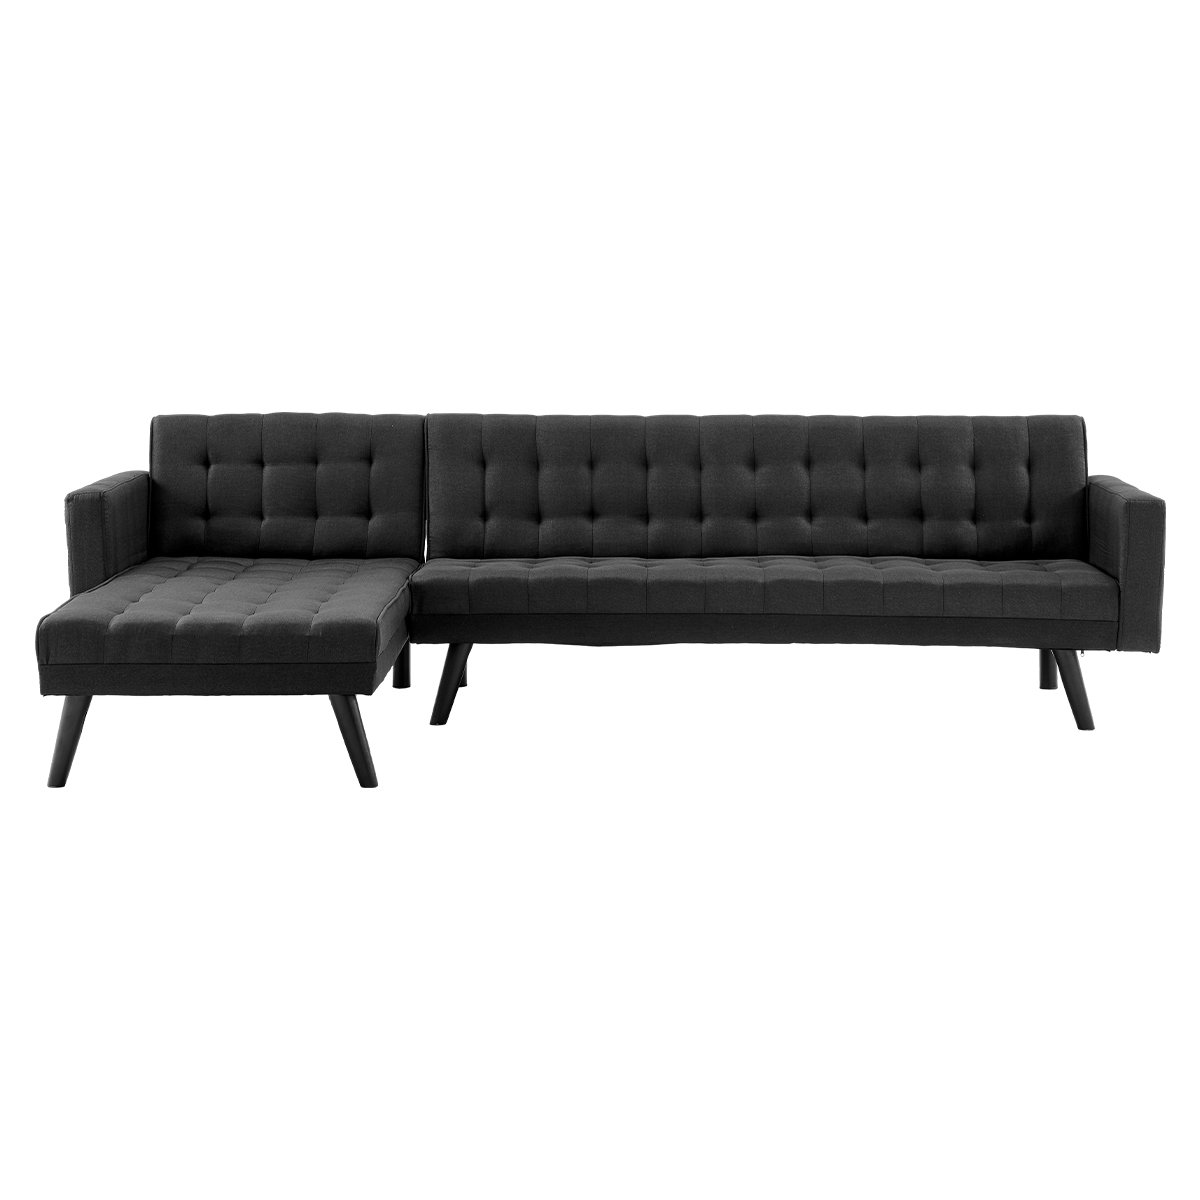 Sarantino 3-Seater Corner Wooden Sofa Bed Lounge Chaise Sofa Black 2